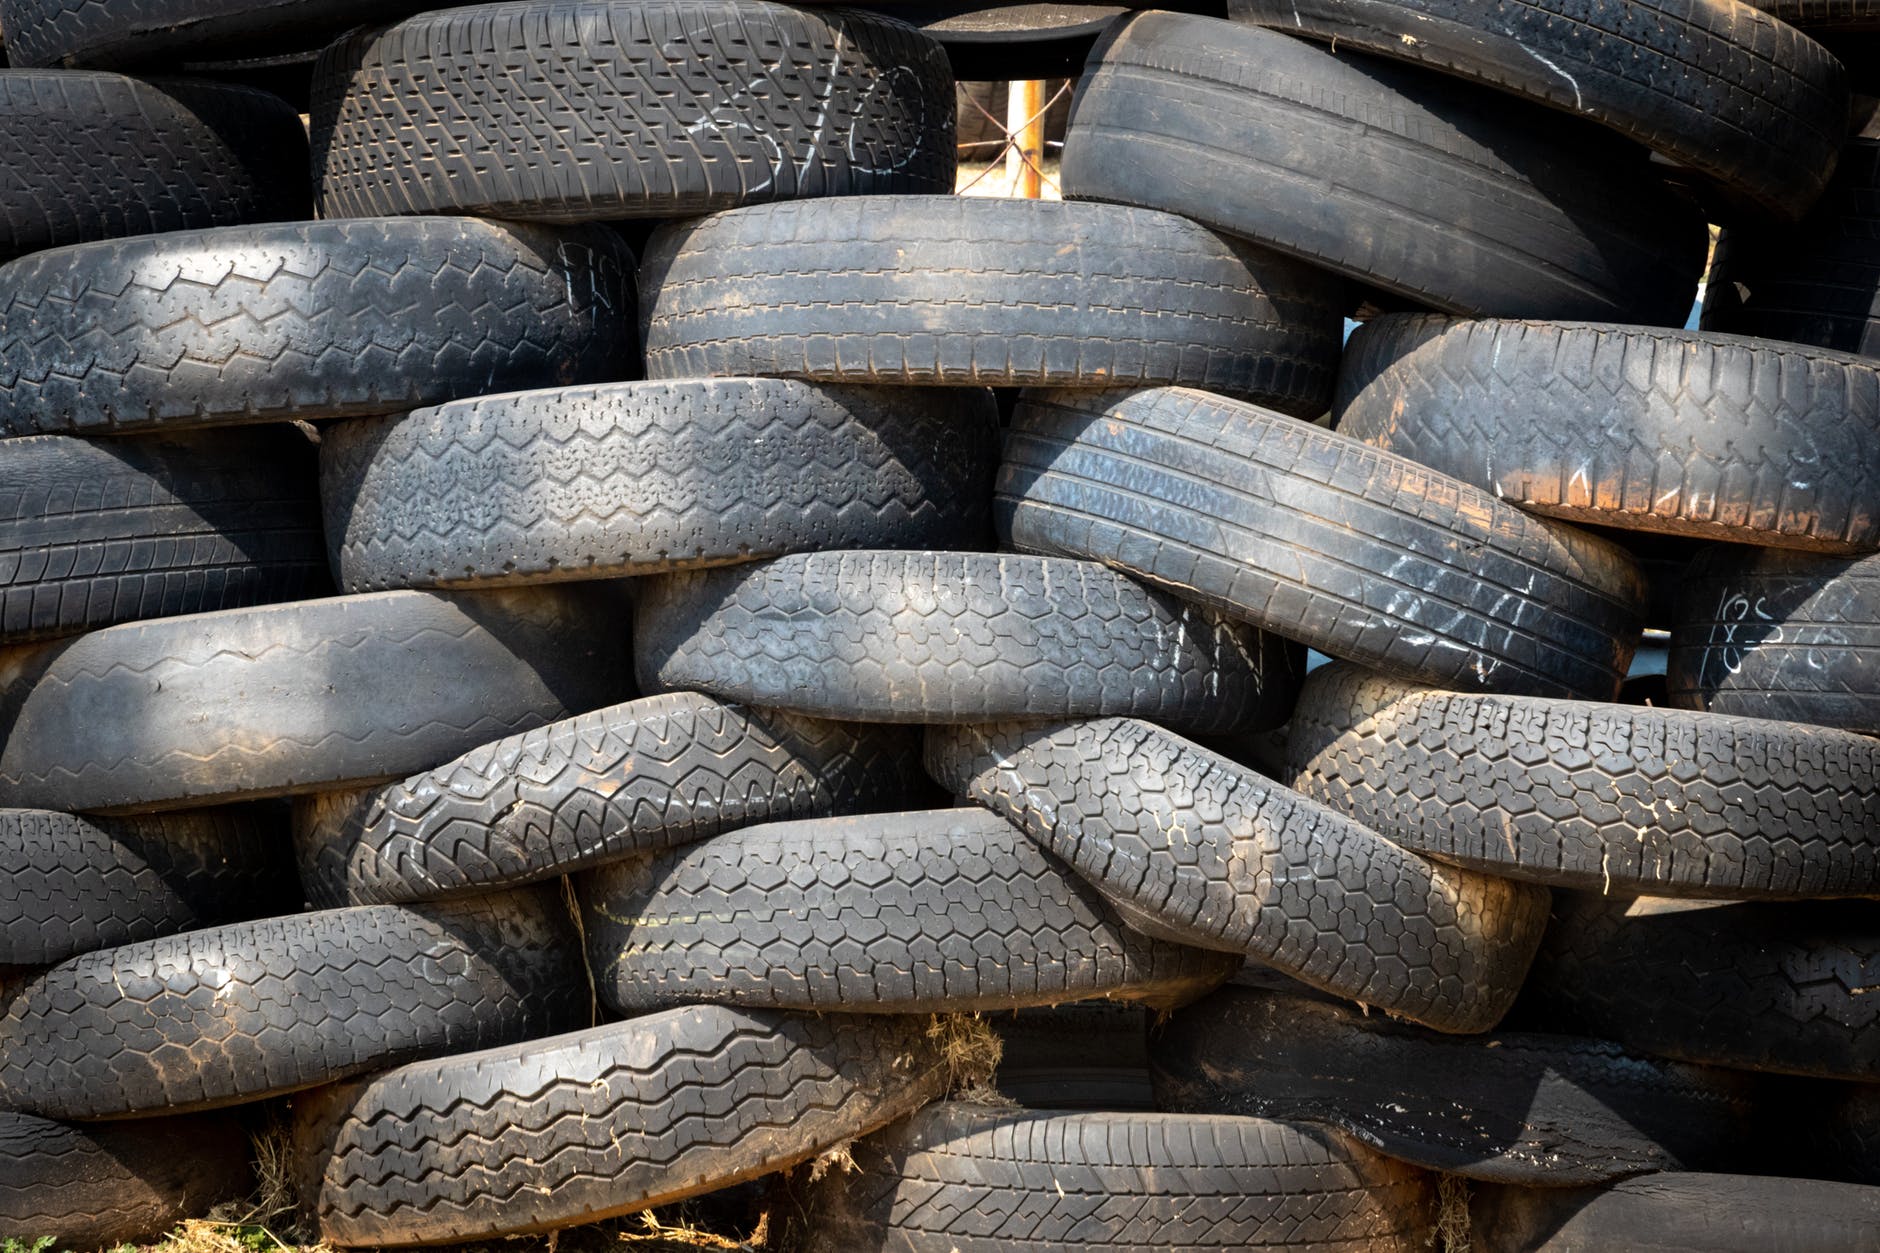 How Long Should Car Tyres Last?